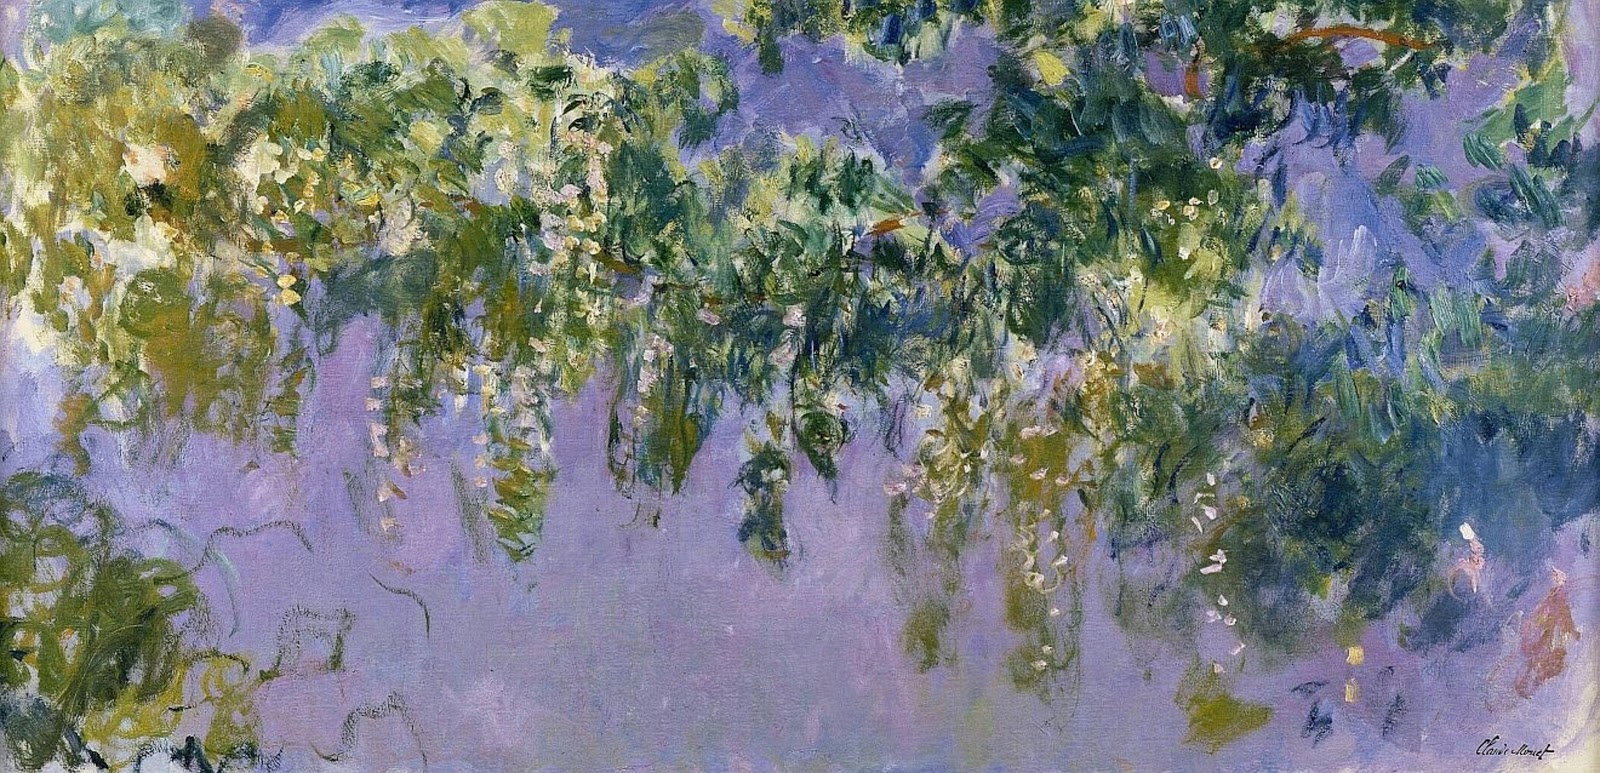 Claude+Monet-1840-1926 (228).jpg